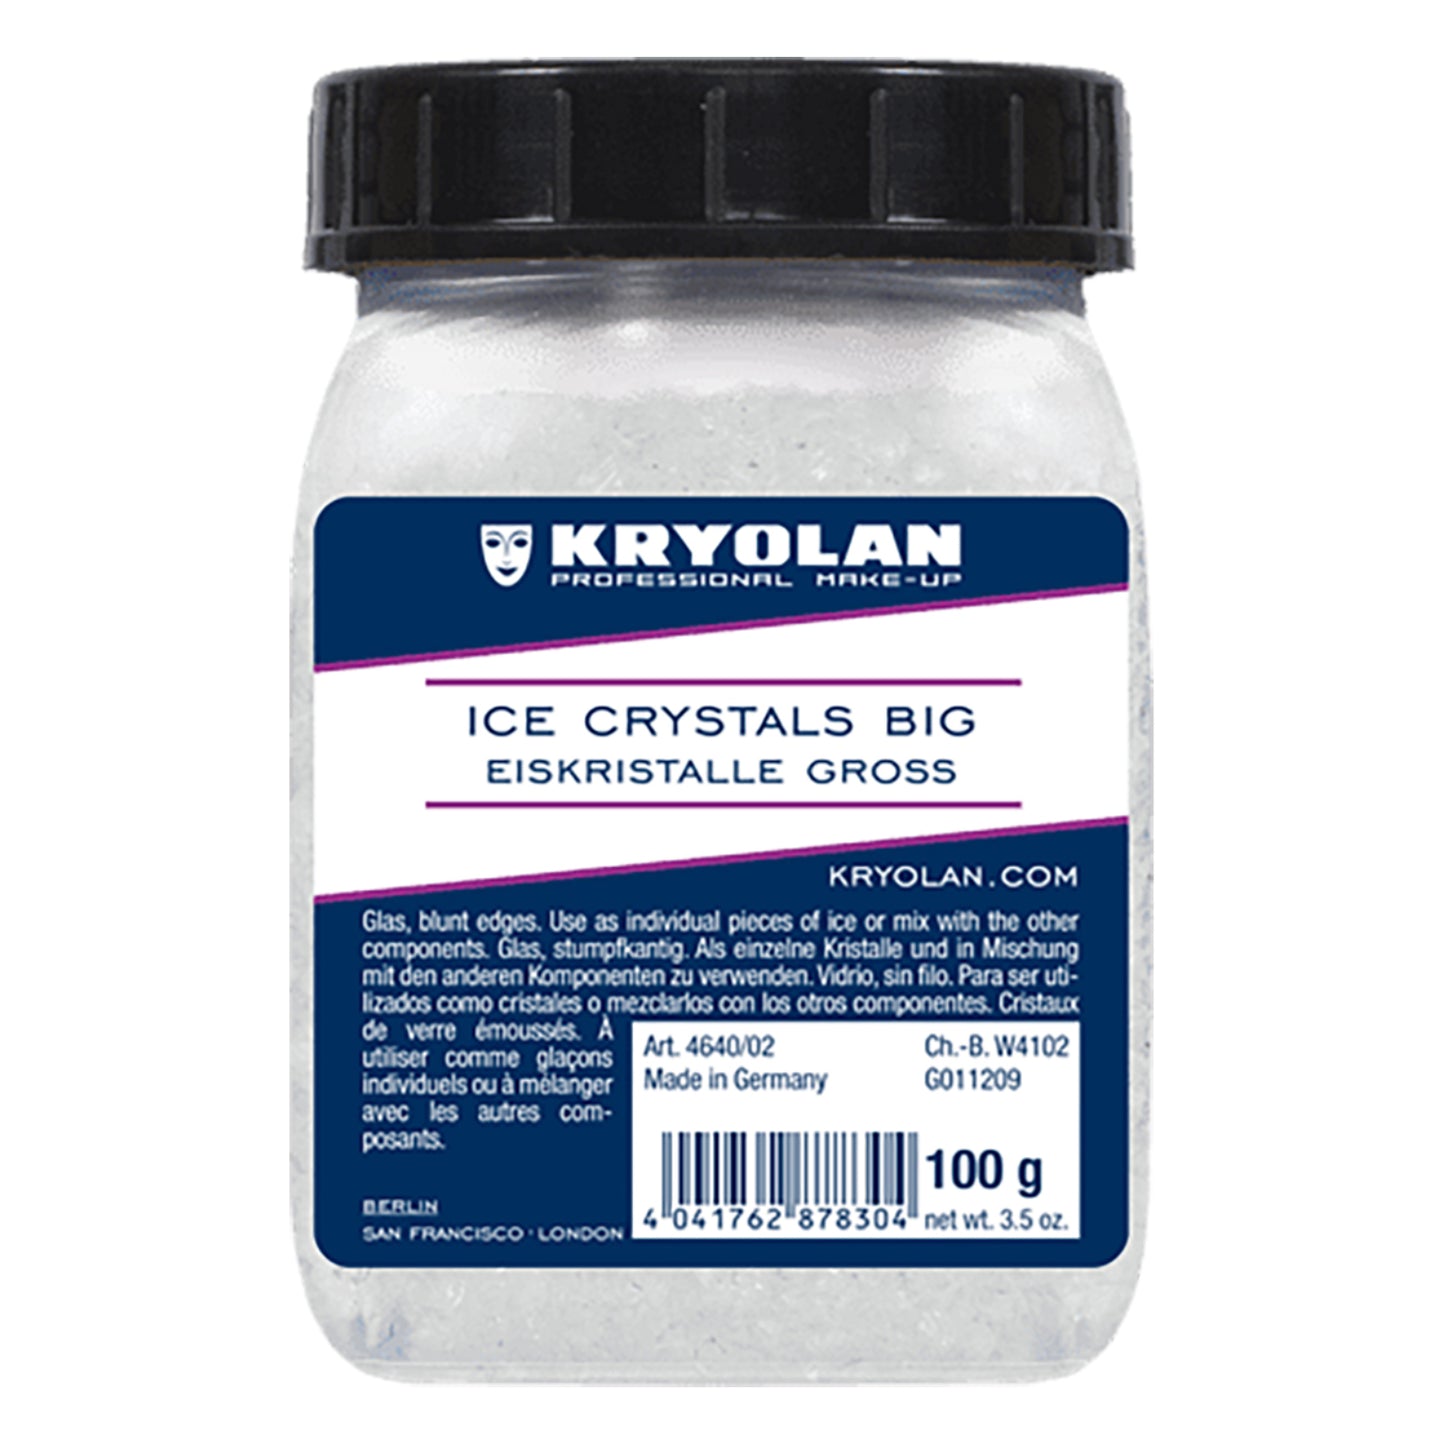 Kryolan Ice Crystals Large